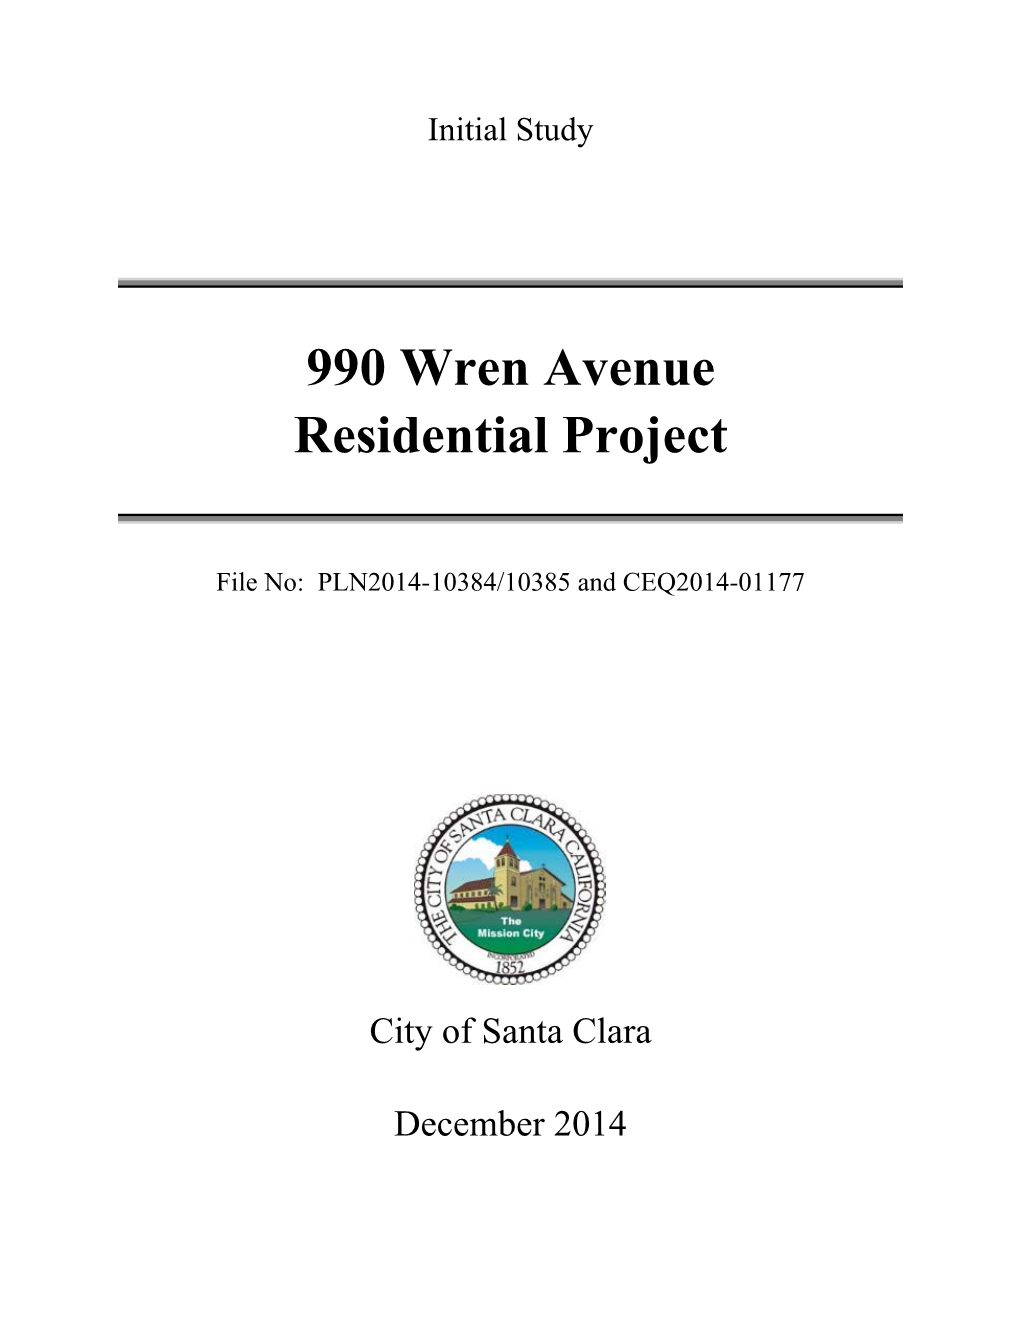 990 Wren Avenue Residential Project